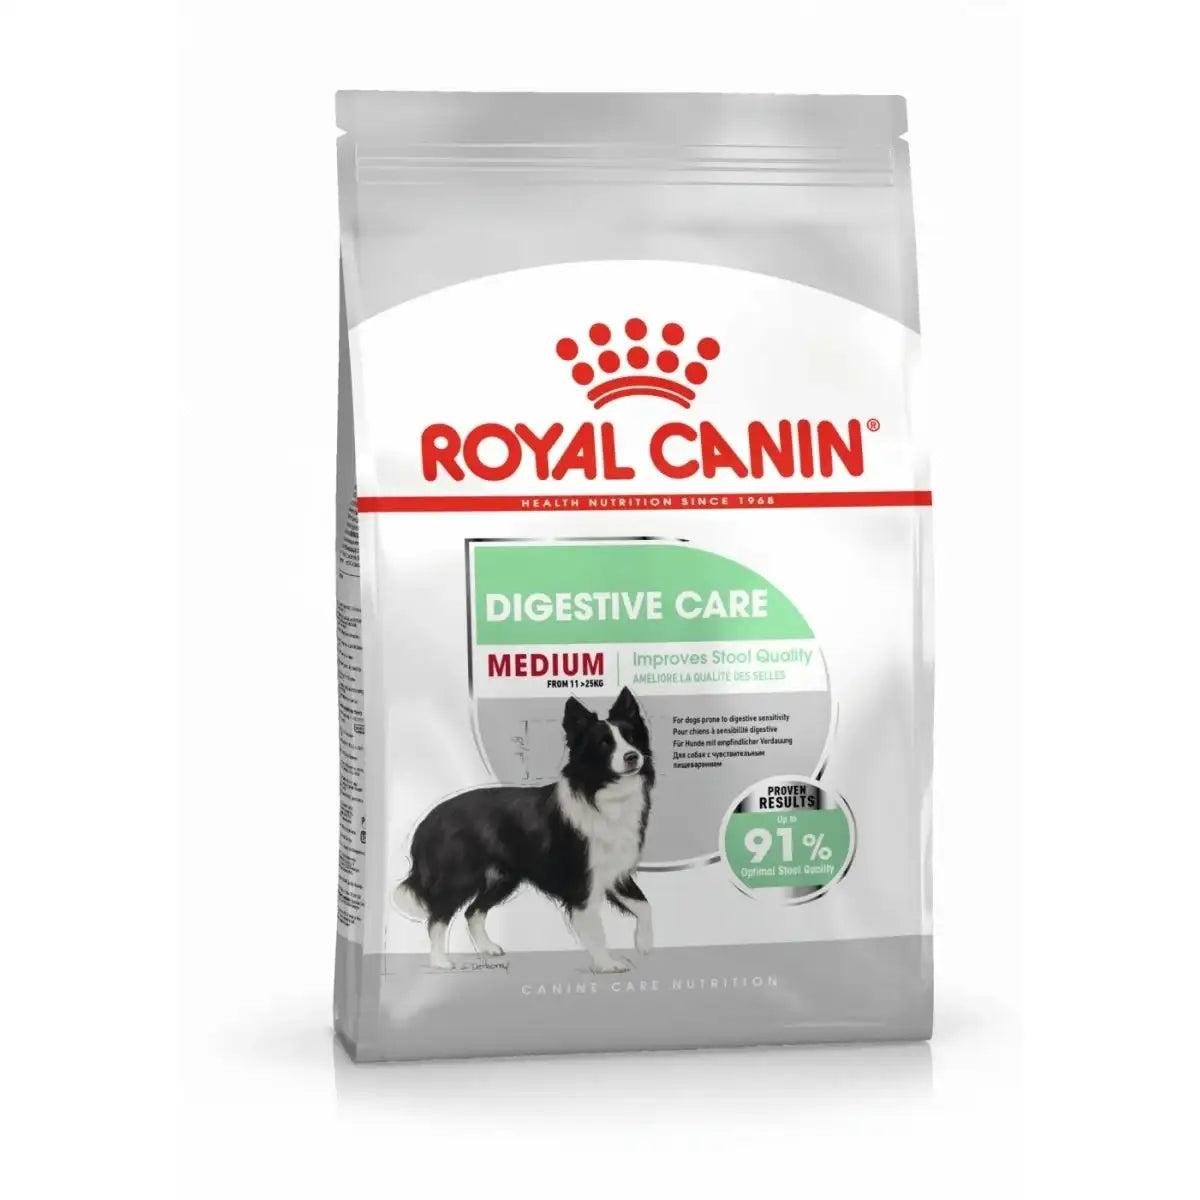 Royal Canin Digestive Care Medium Dog Dry Food 3kg